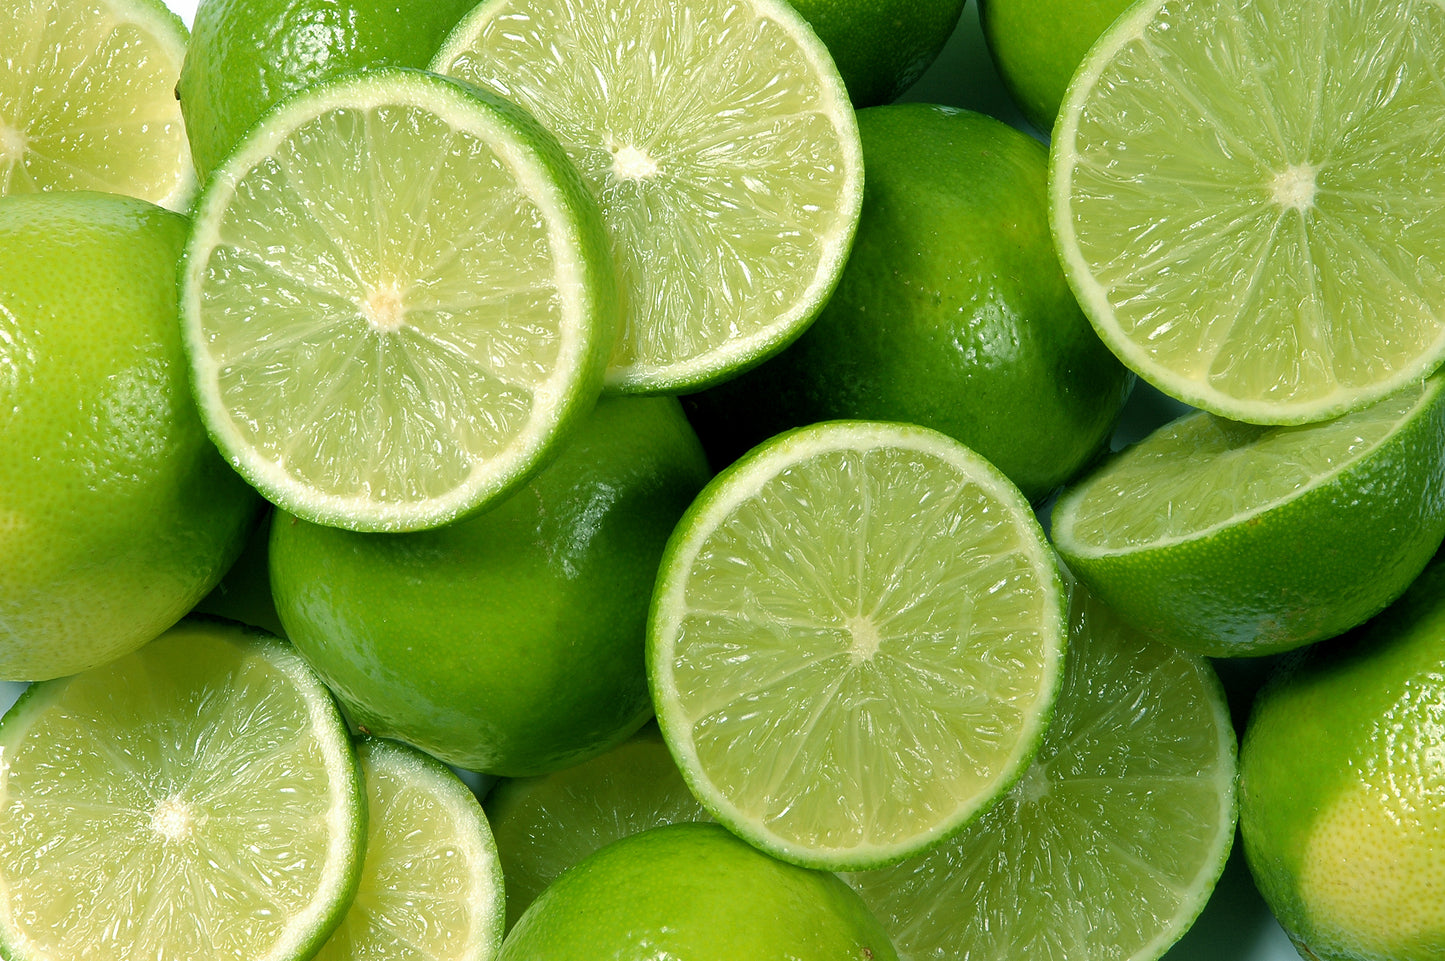 Limes x 4